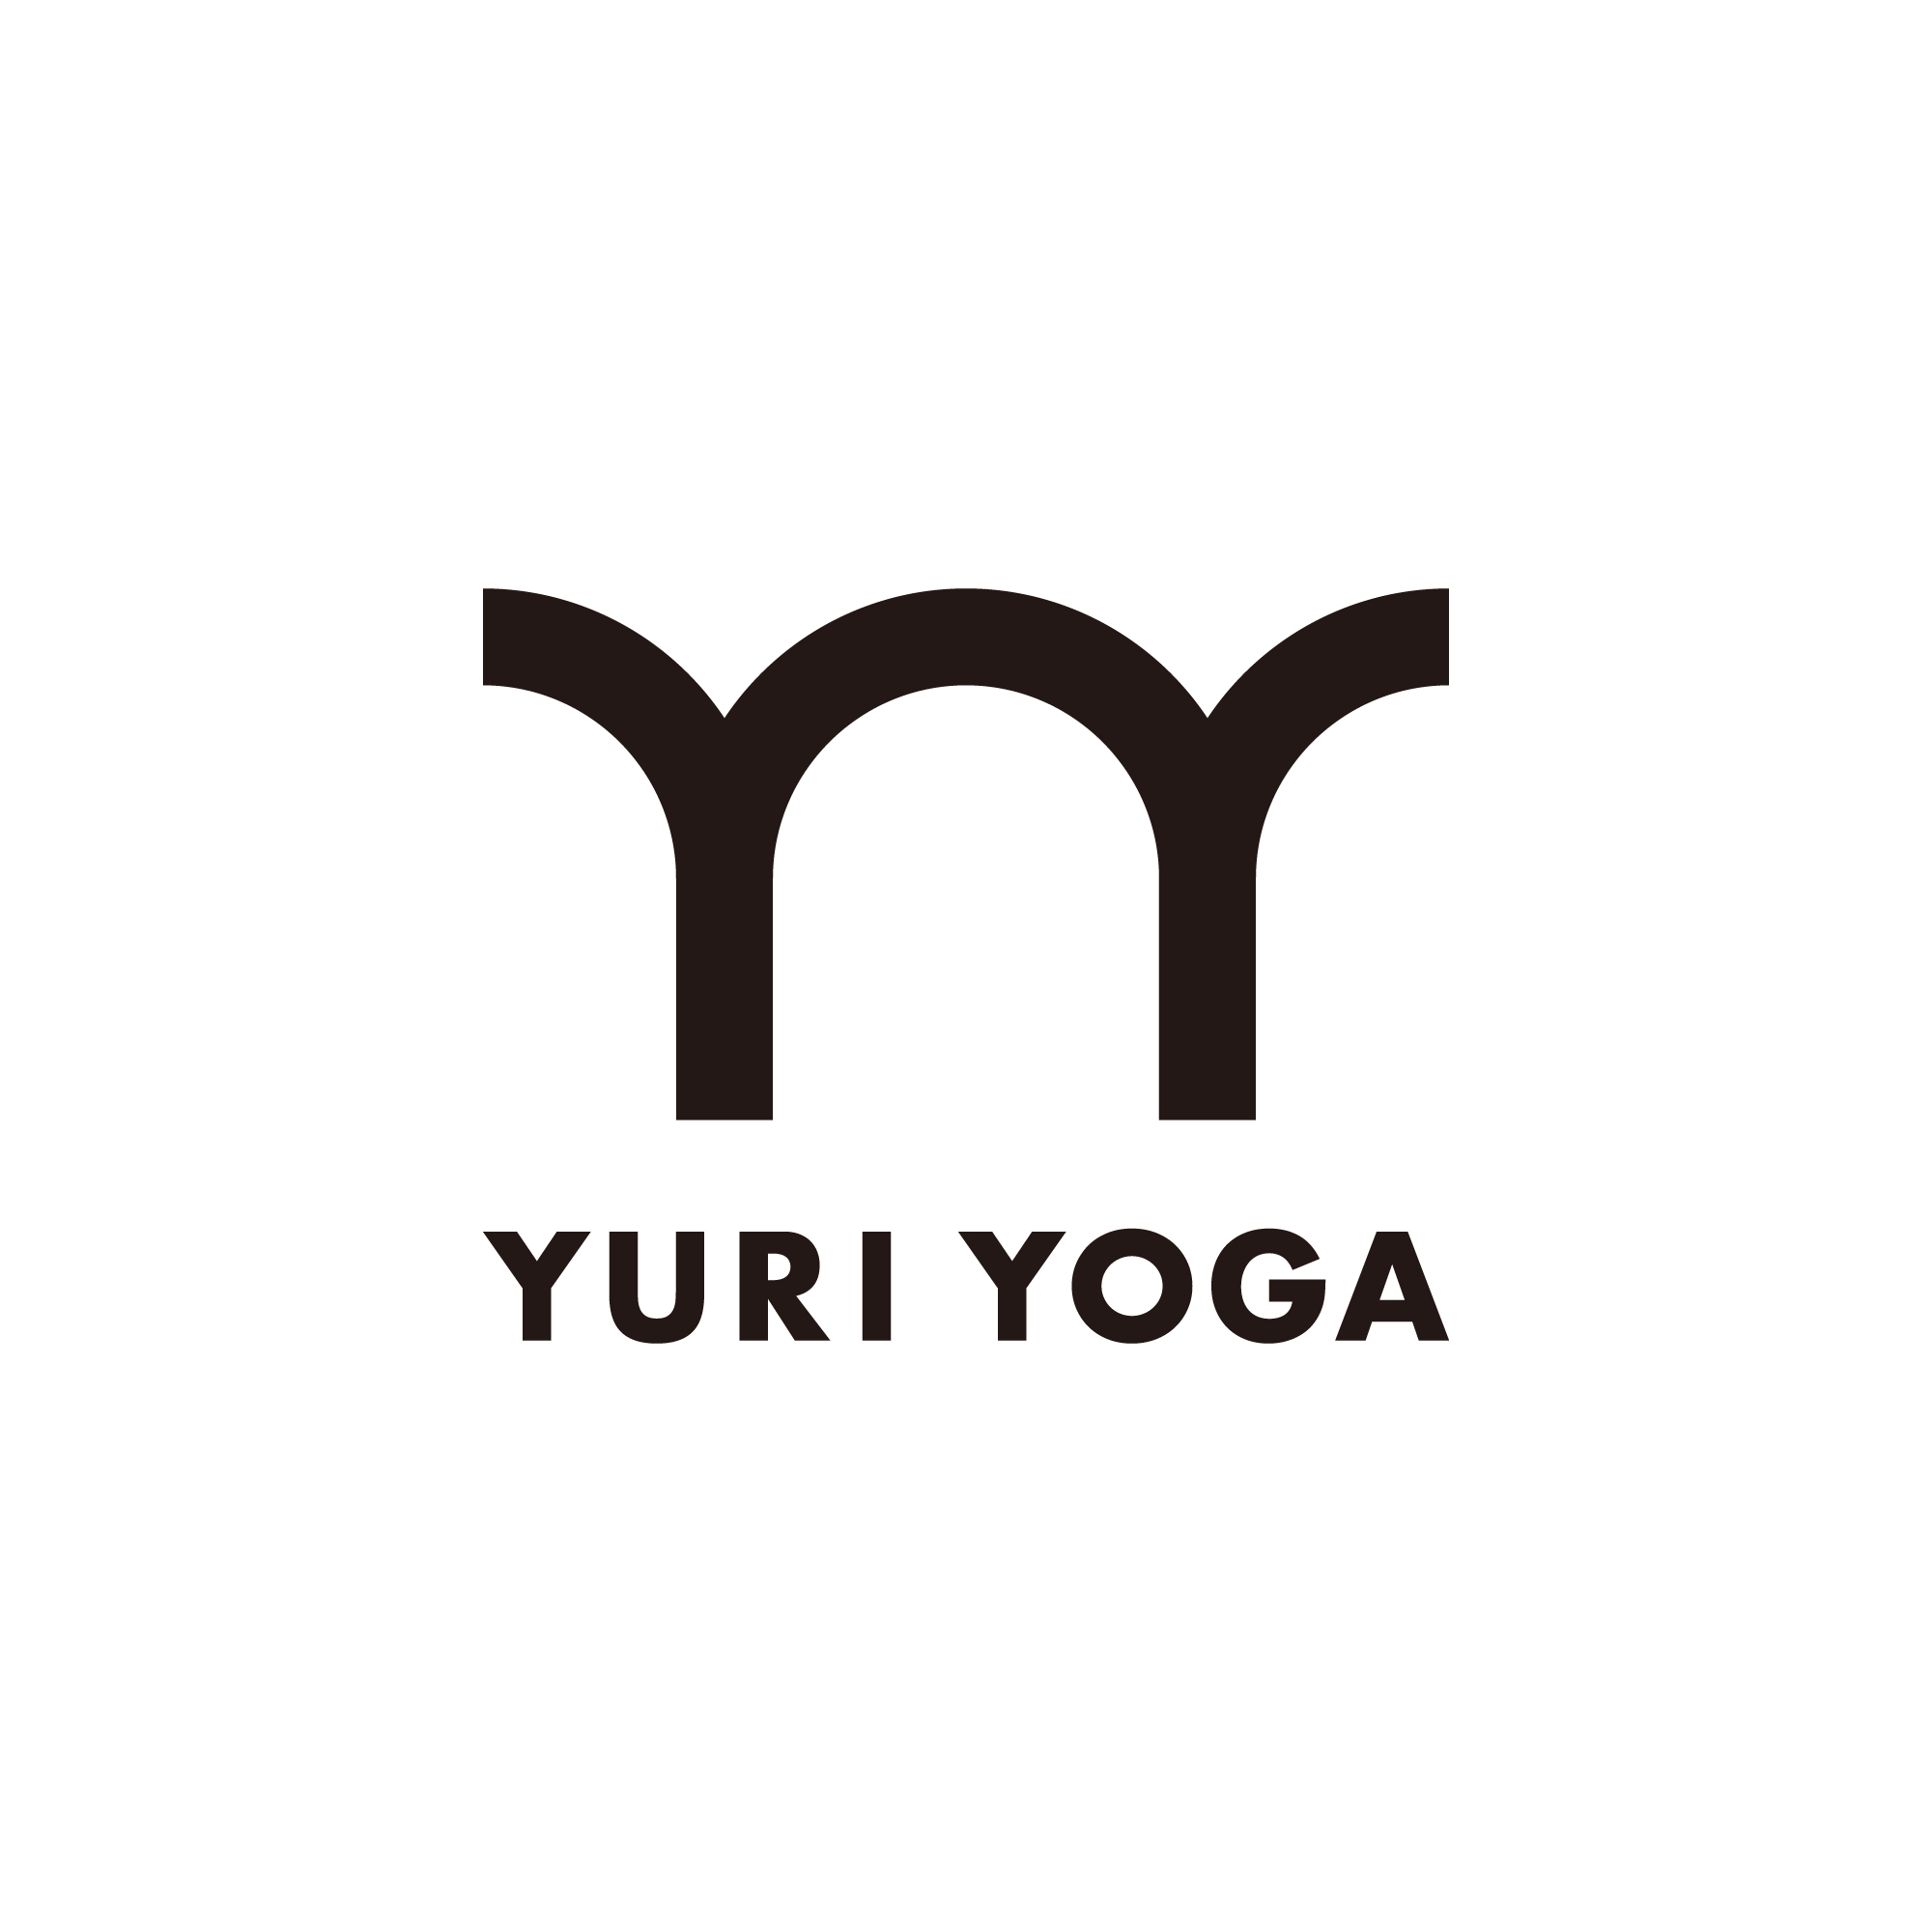 YURI YOGA ロゴマーク